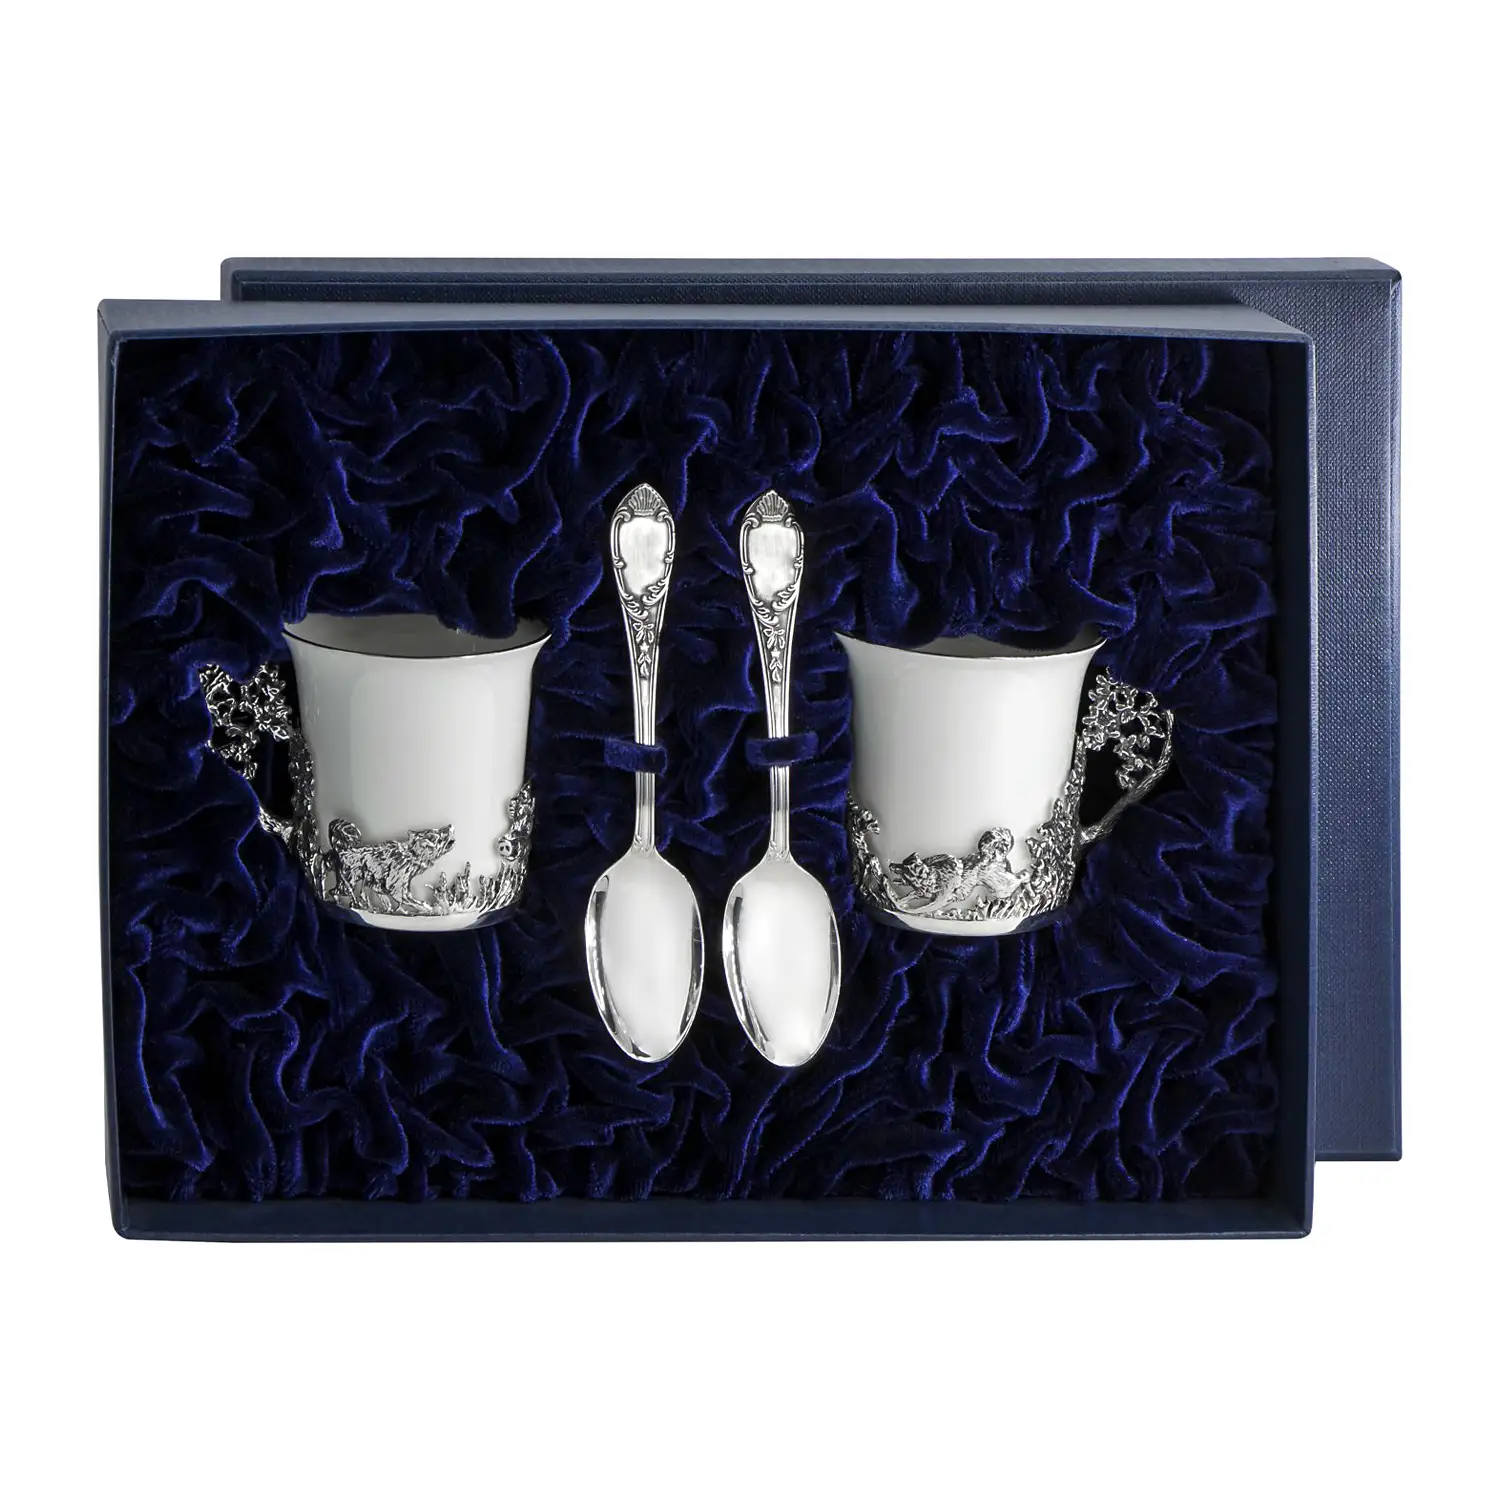 Набор кофейных чашек Кабан: ложка, чашка (Серебро 925) набор кофейных чашек богема ложка чашка на 6 персон серебро 925